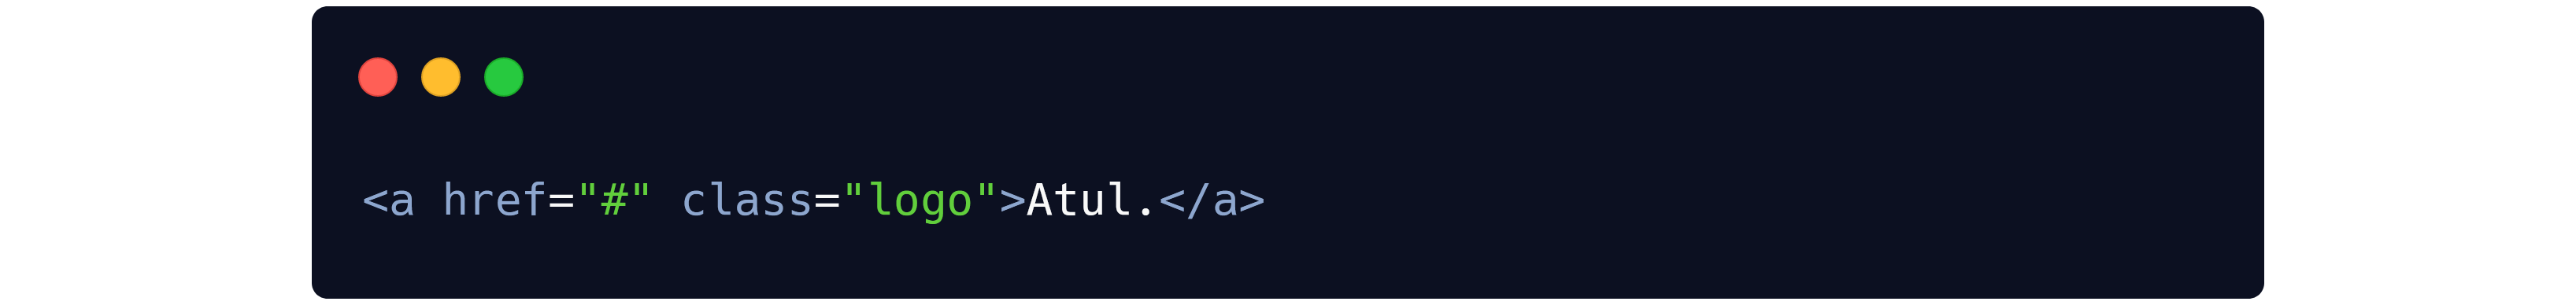 HTML code to change logo